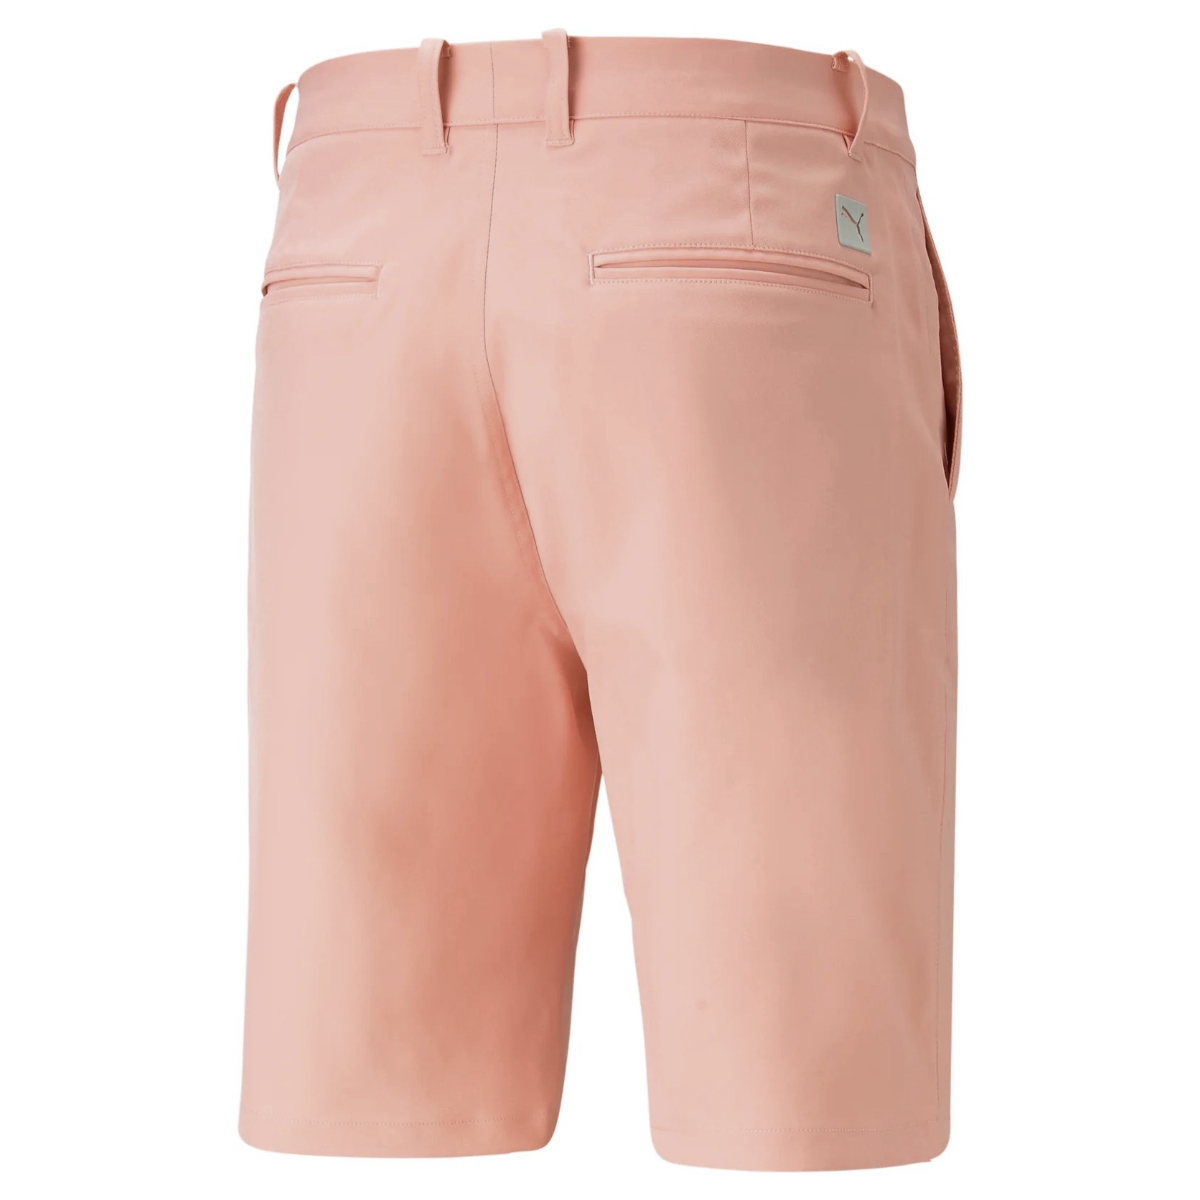 Puma Dealer 10 Inch Shorts Pink